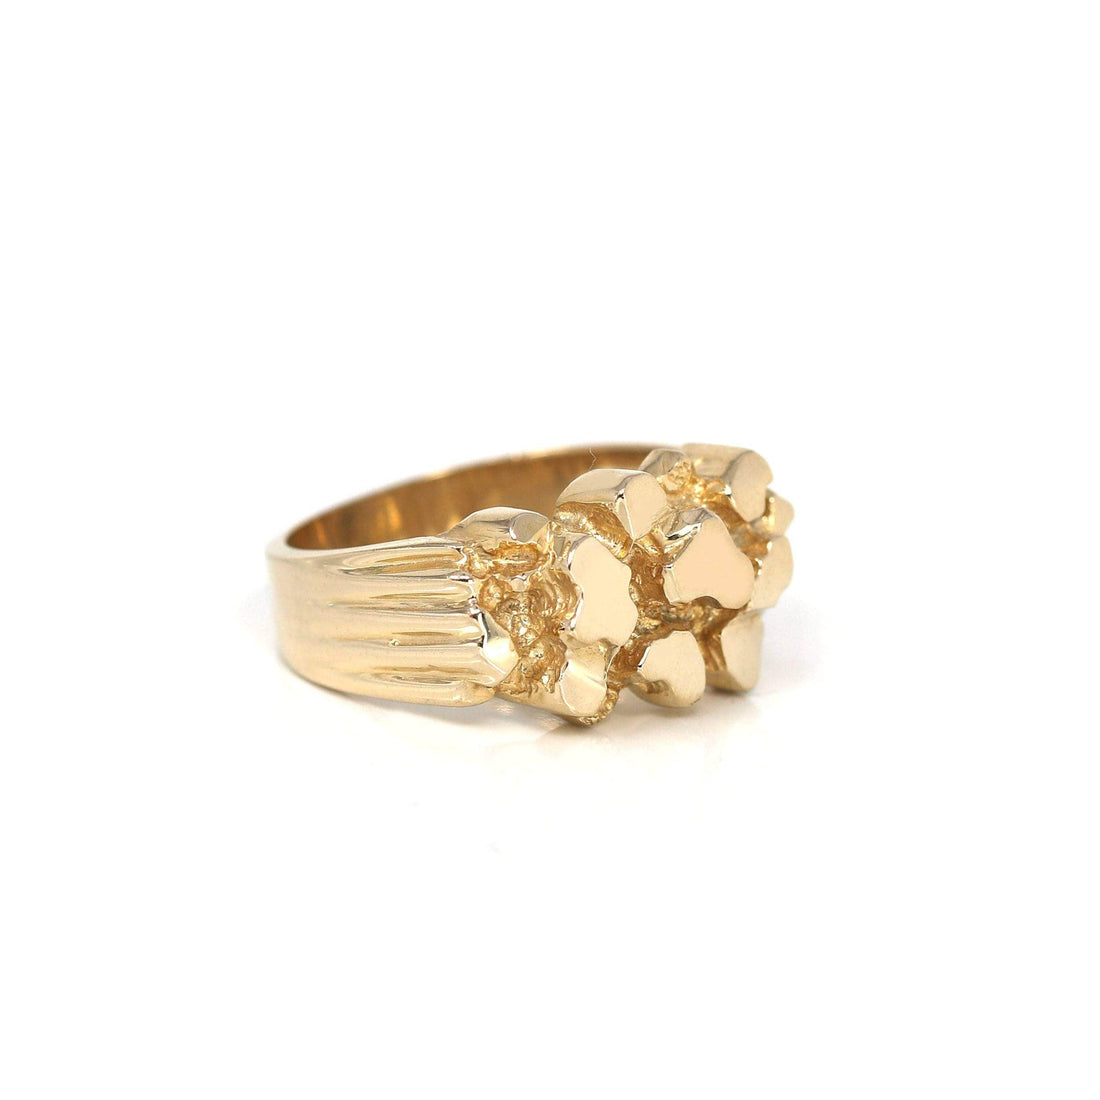 Baikalla Jewelry Gold Diamond Men's Ring 8.5 14k Solid Yellow Gold Nugget Men's Band Ring